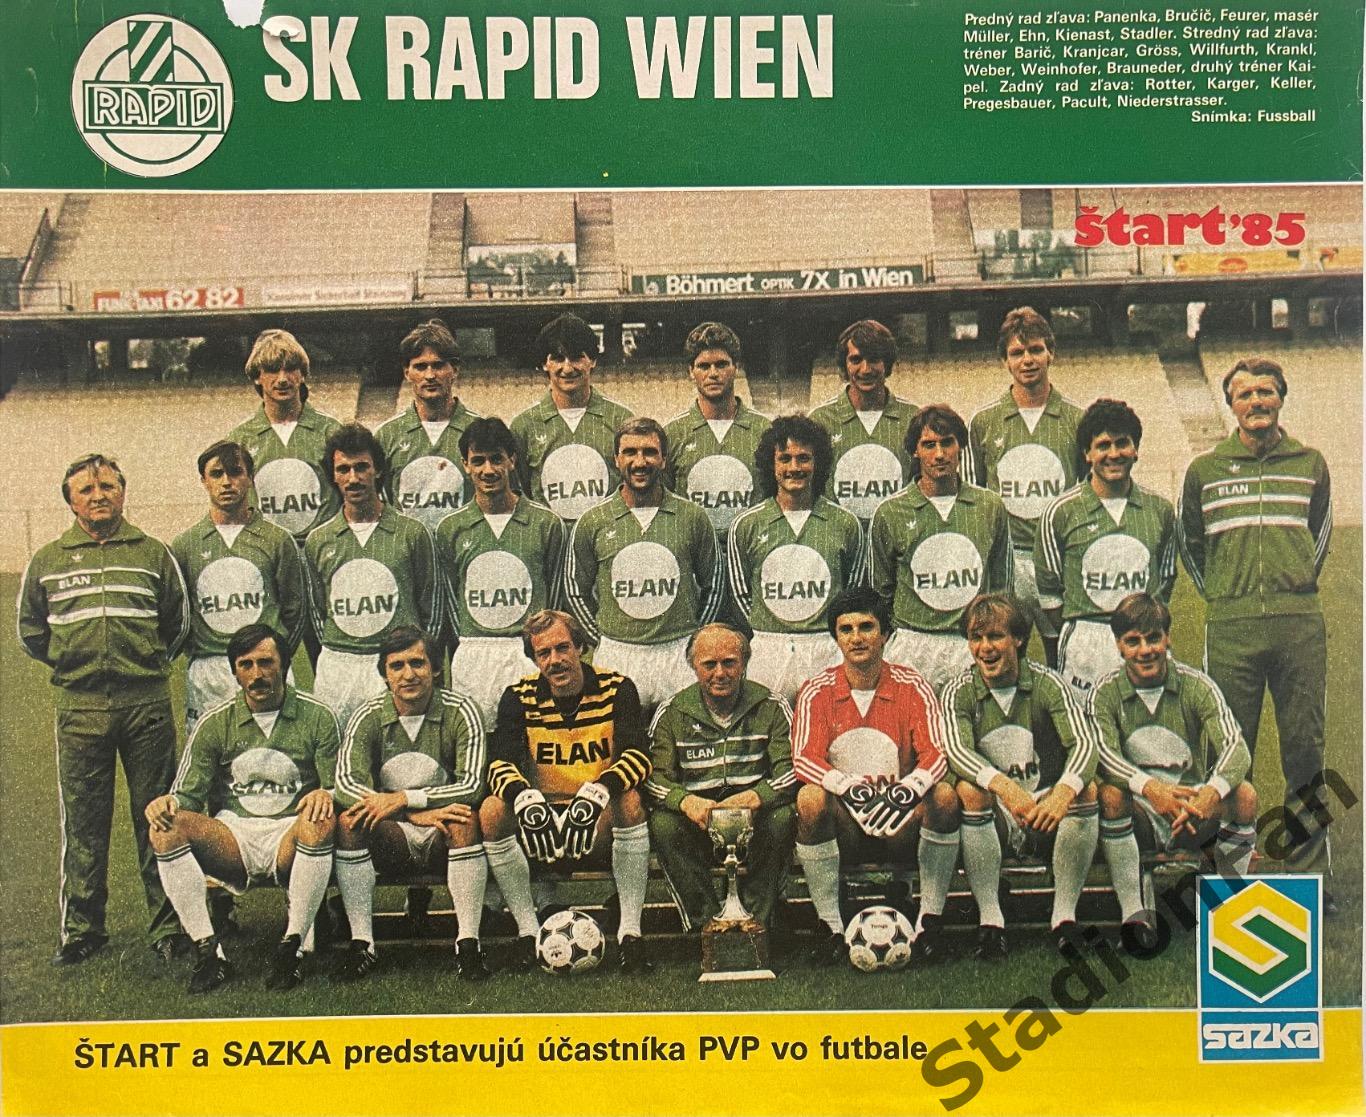 Постер из журнала Start (Старт) - Rapid Wien, 1985